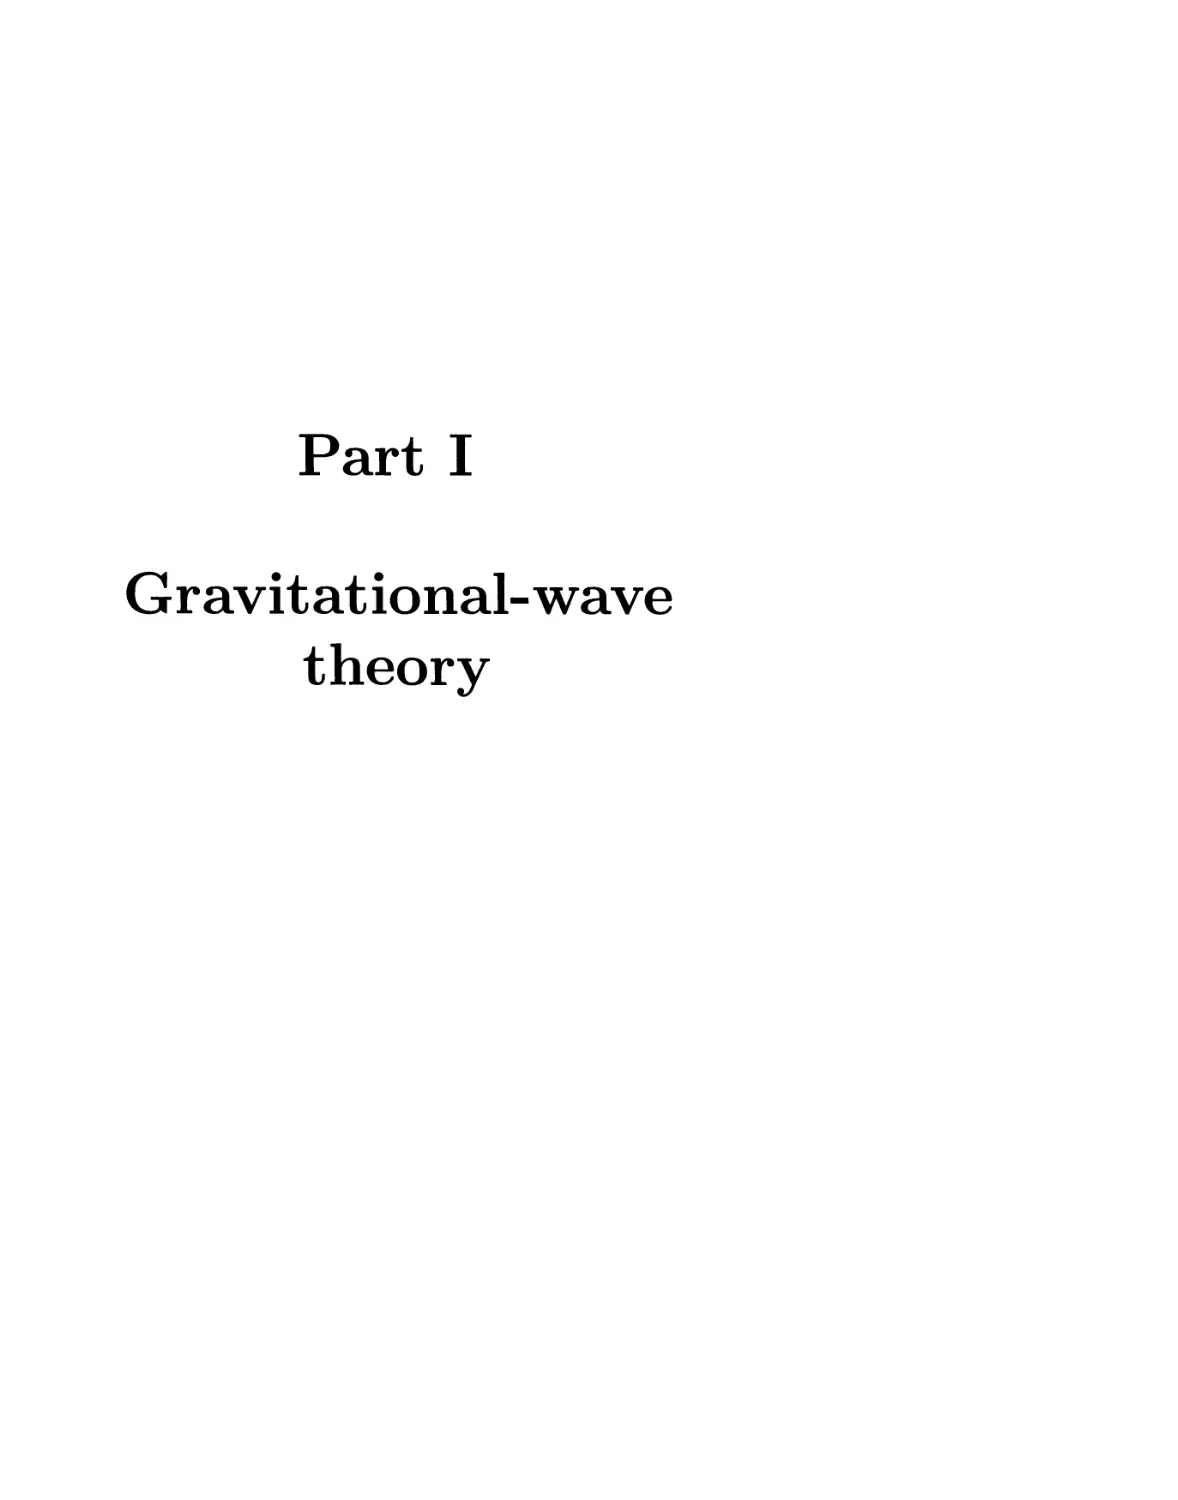 Part I: Gravitational-wave theory 1